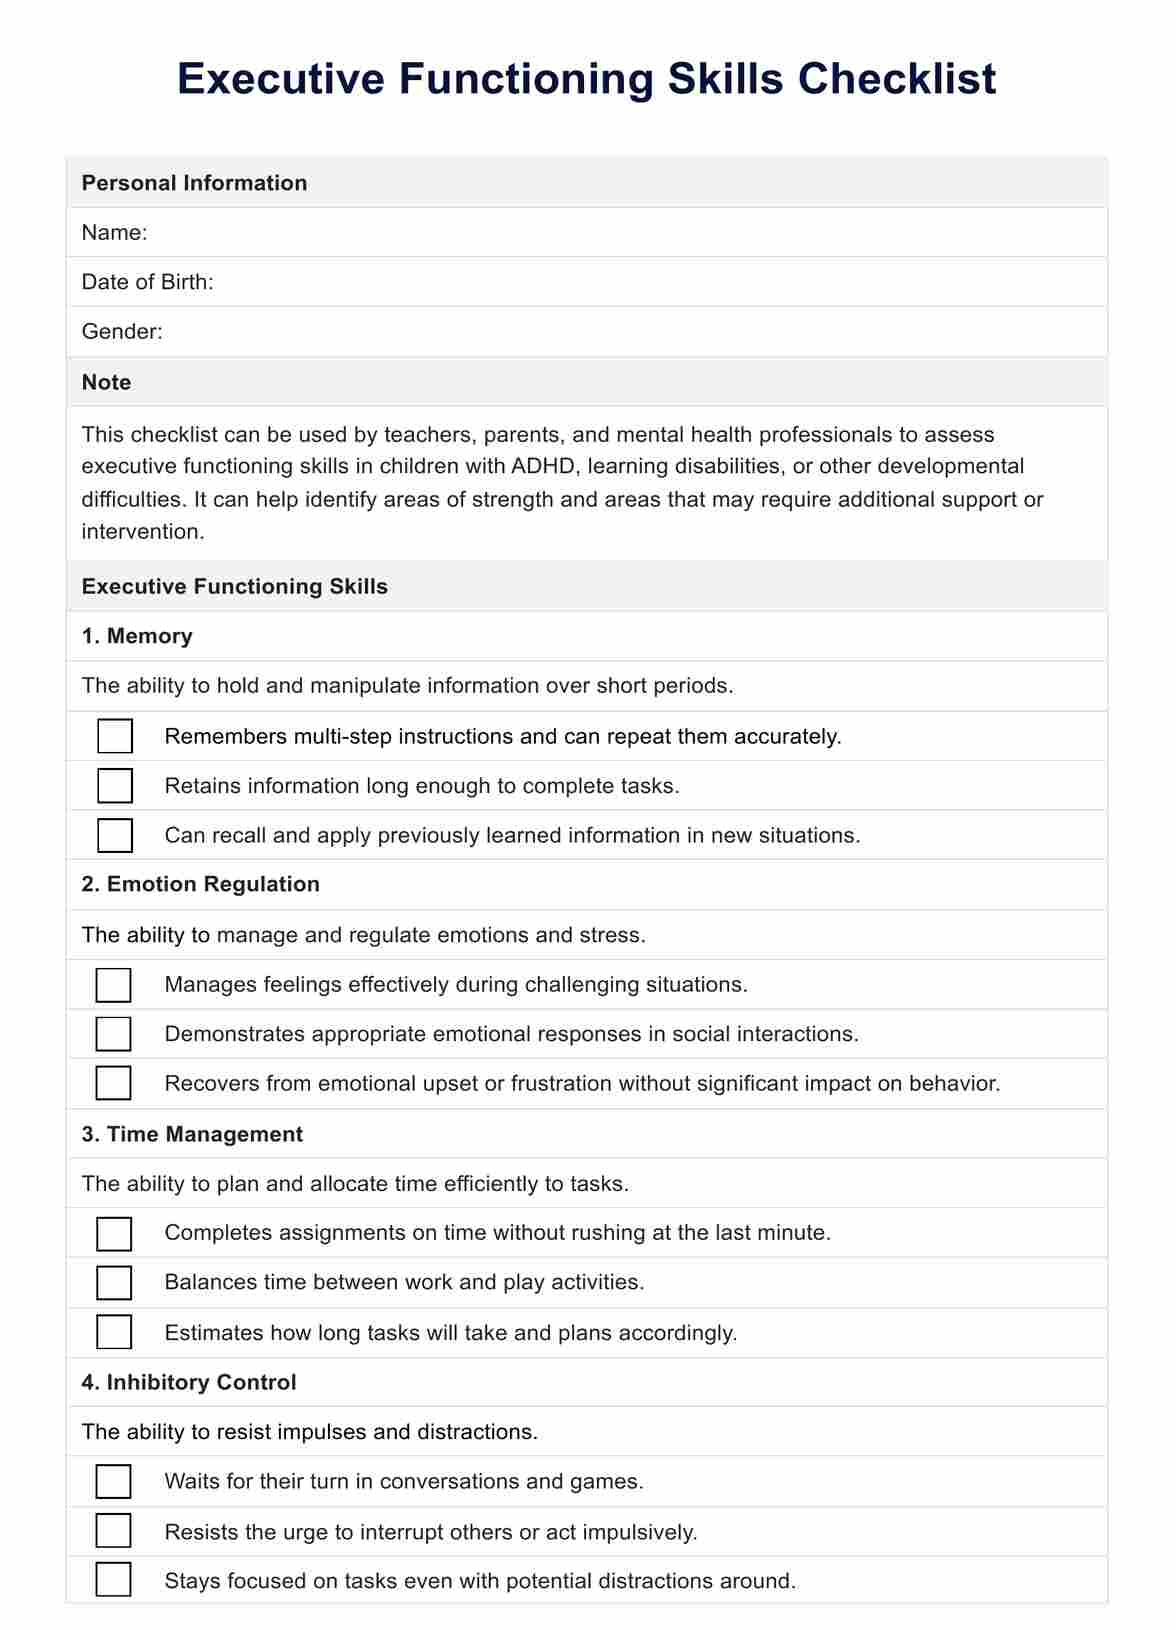 Executive Functioning Skills Checklist PDF Example